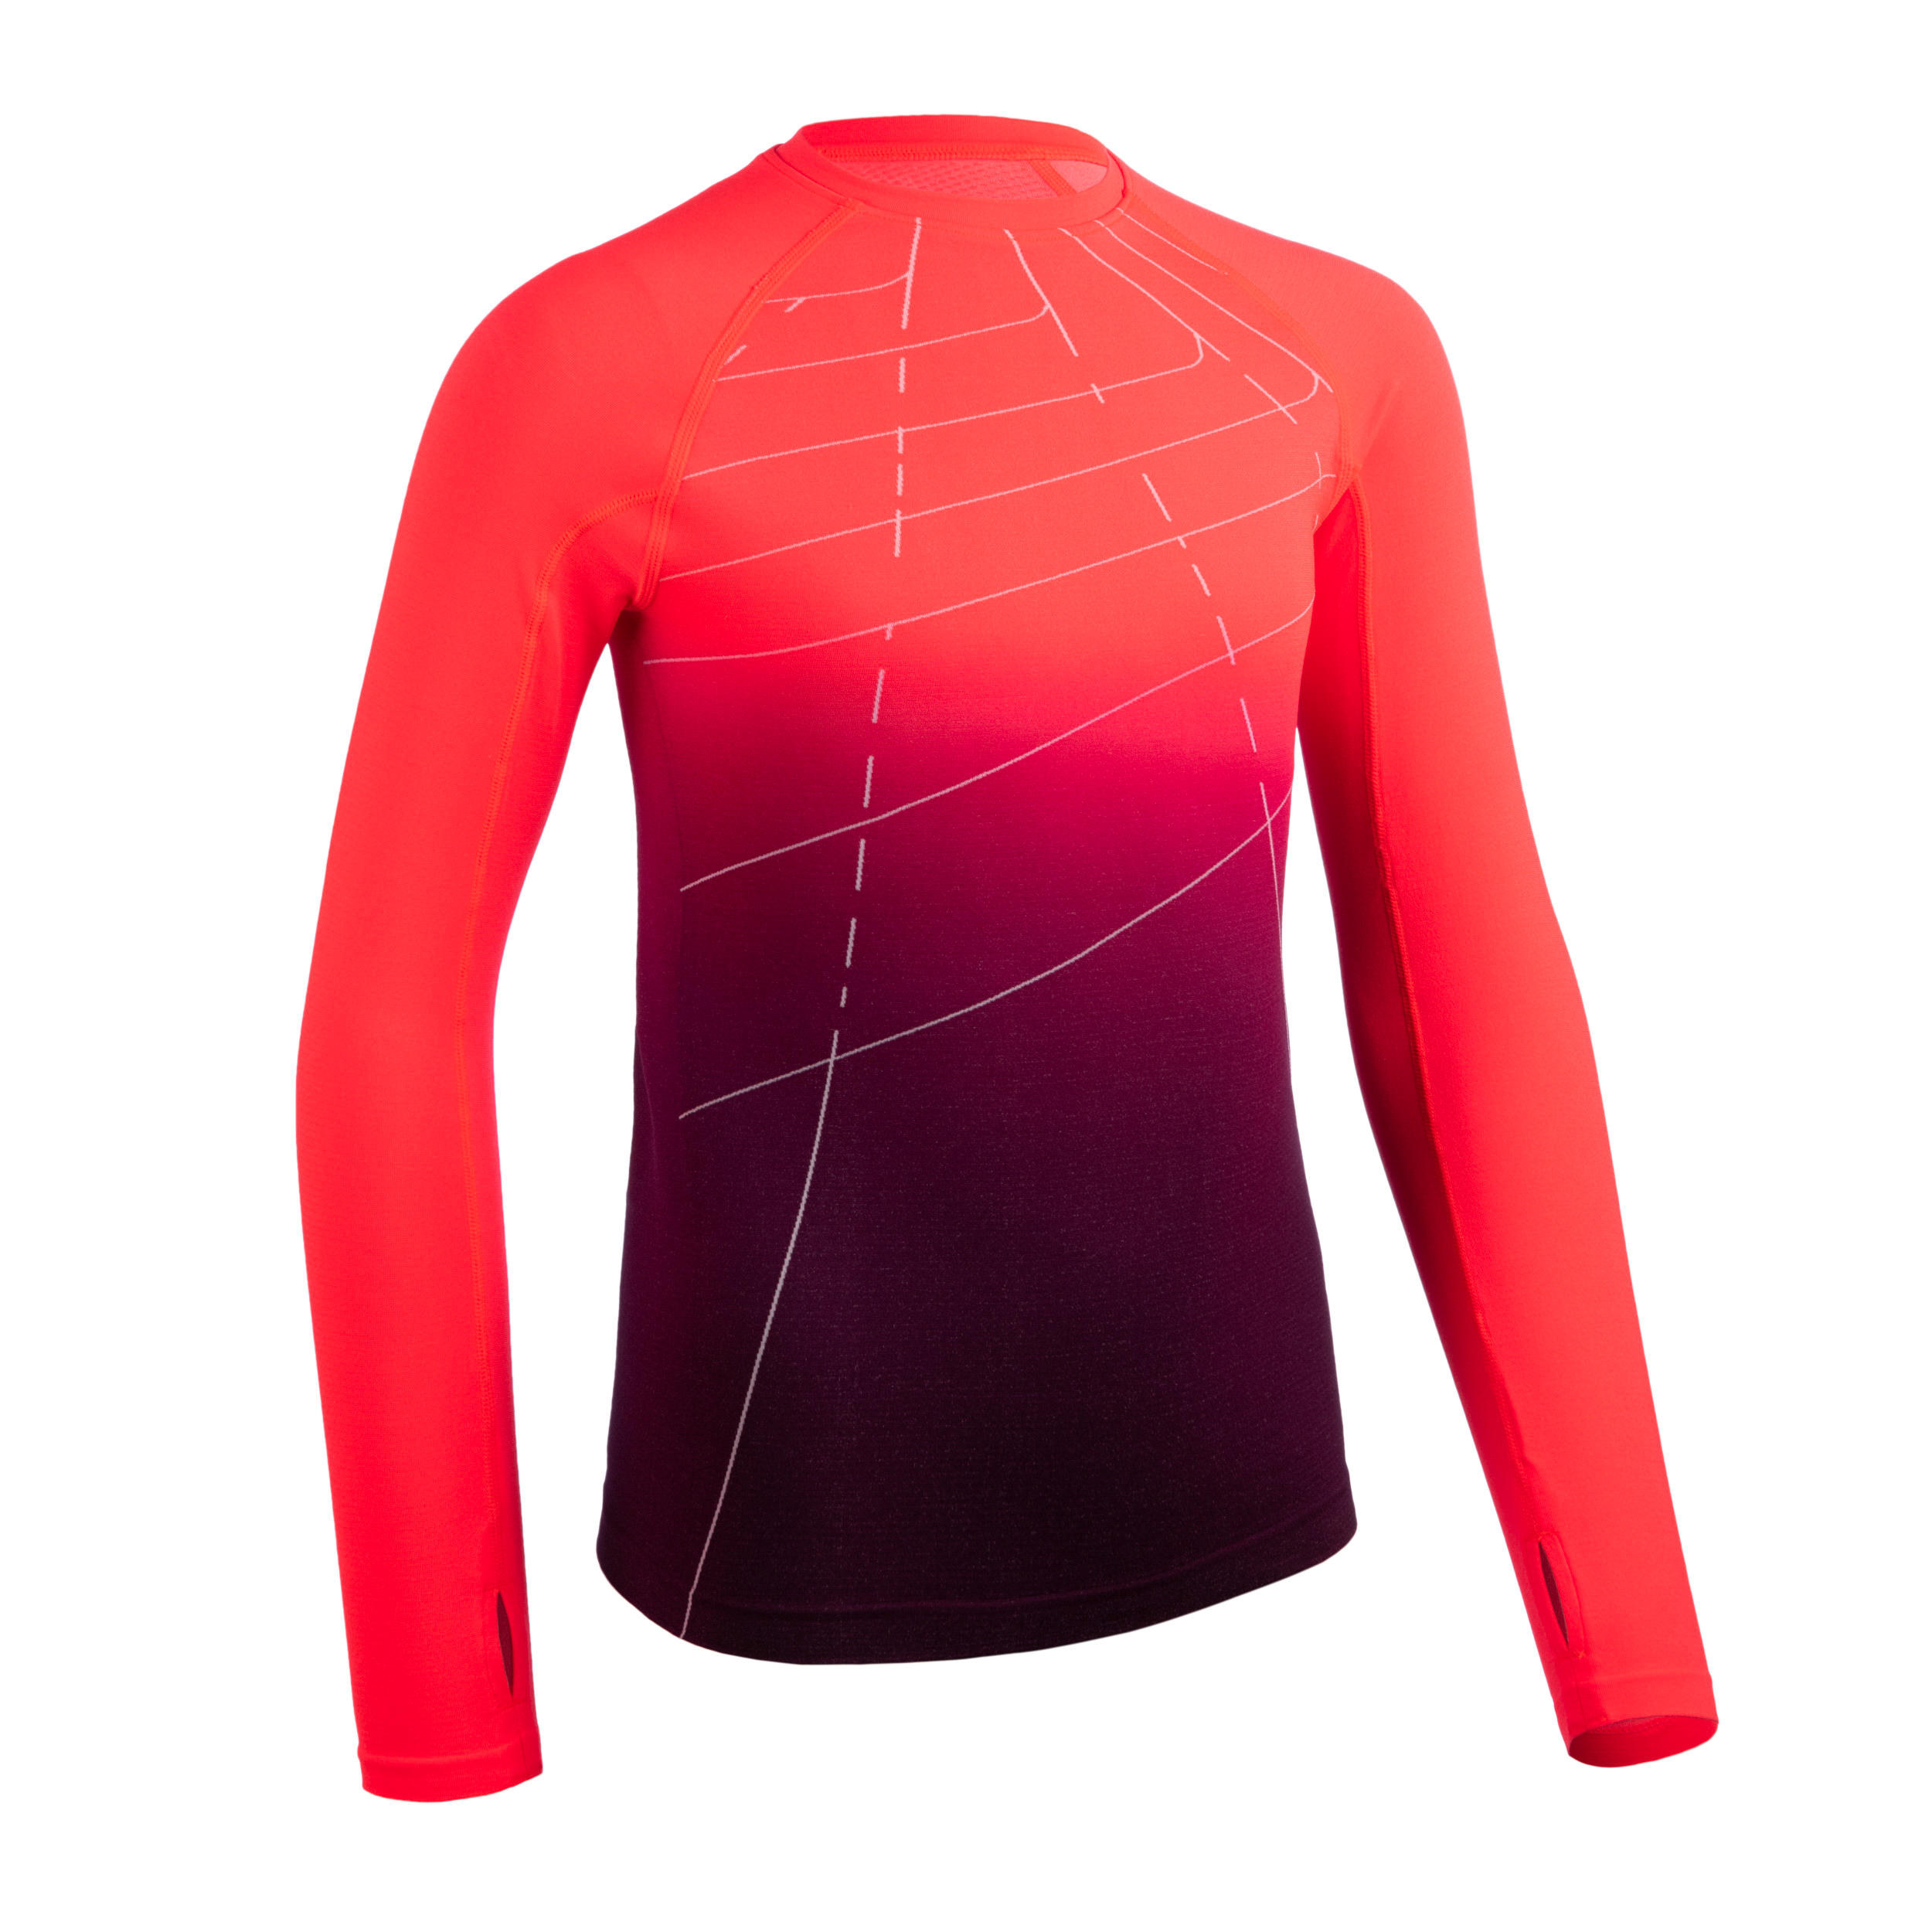 KIPRUN Girls' Athletics Long-Sleeved Jersey AT 500 Skincare - neon coral pink